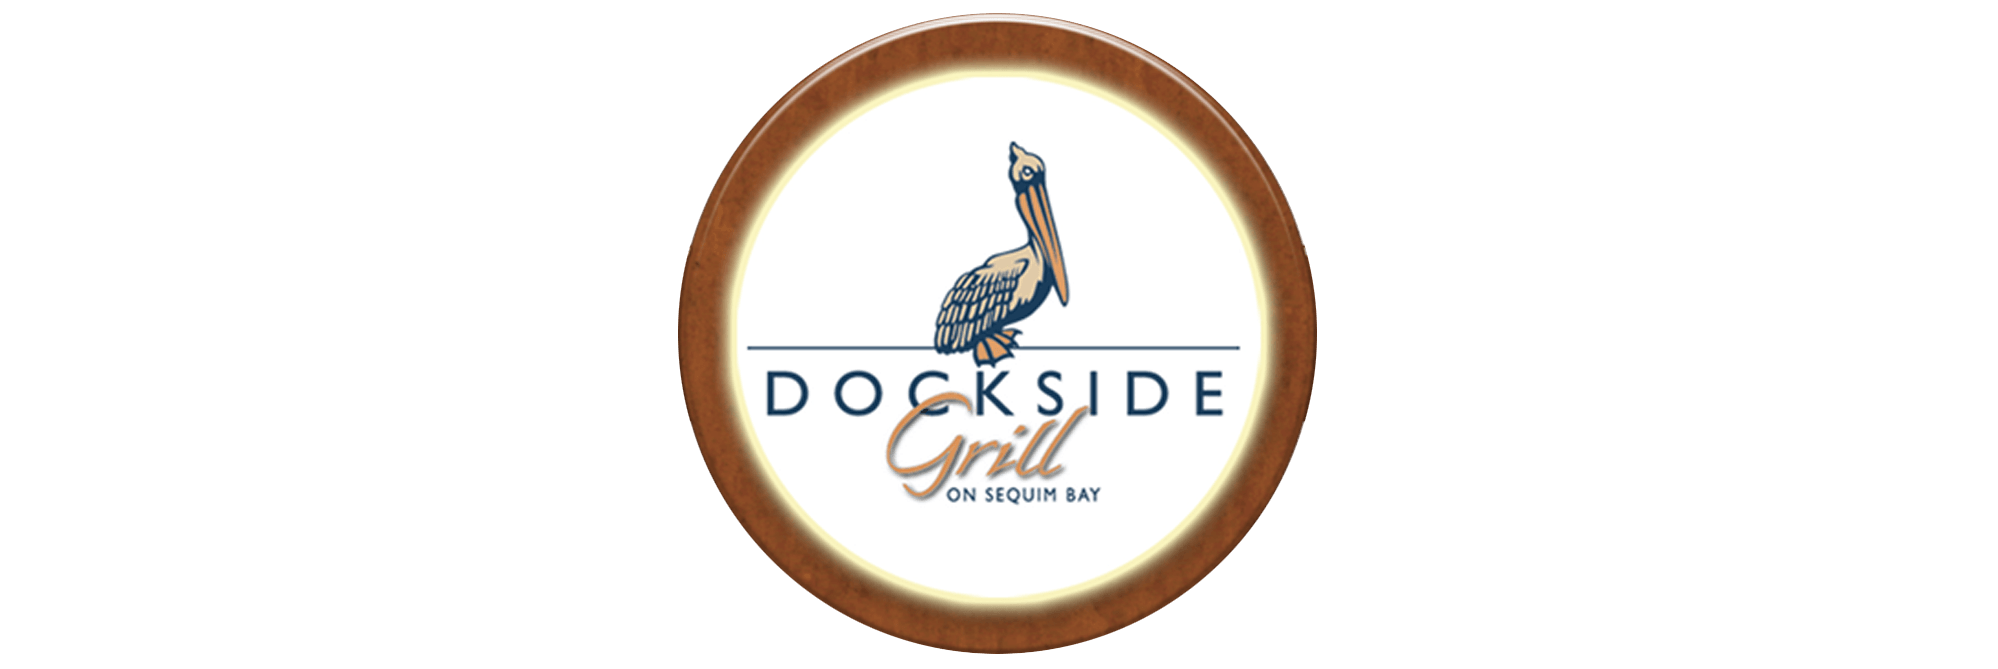 Sequim Logo - Dockside Grill in Sequim WA